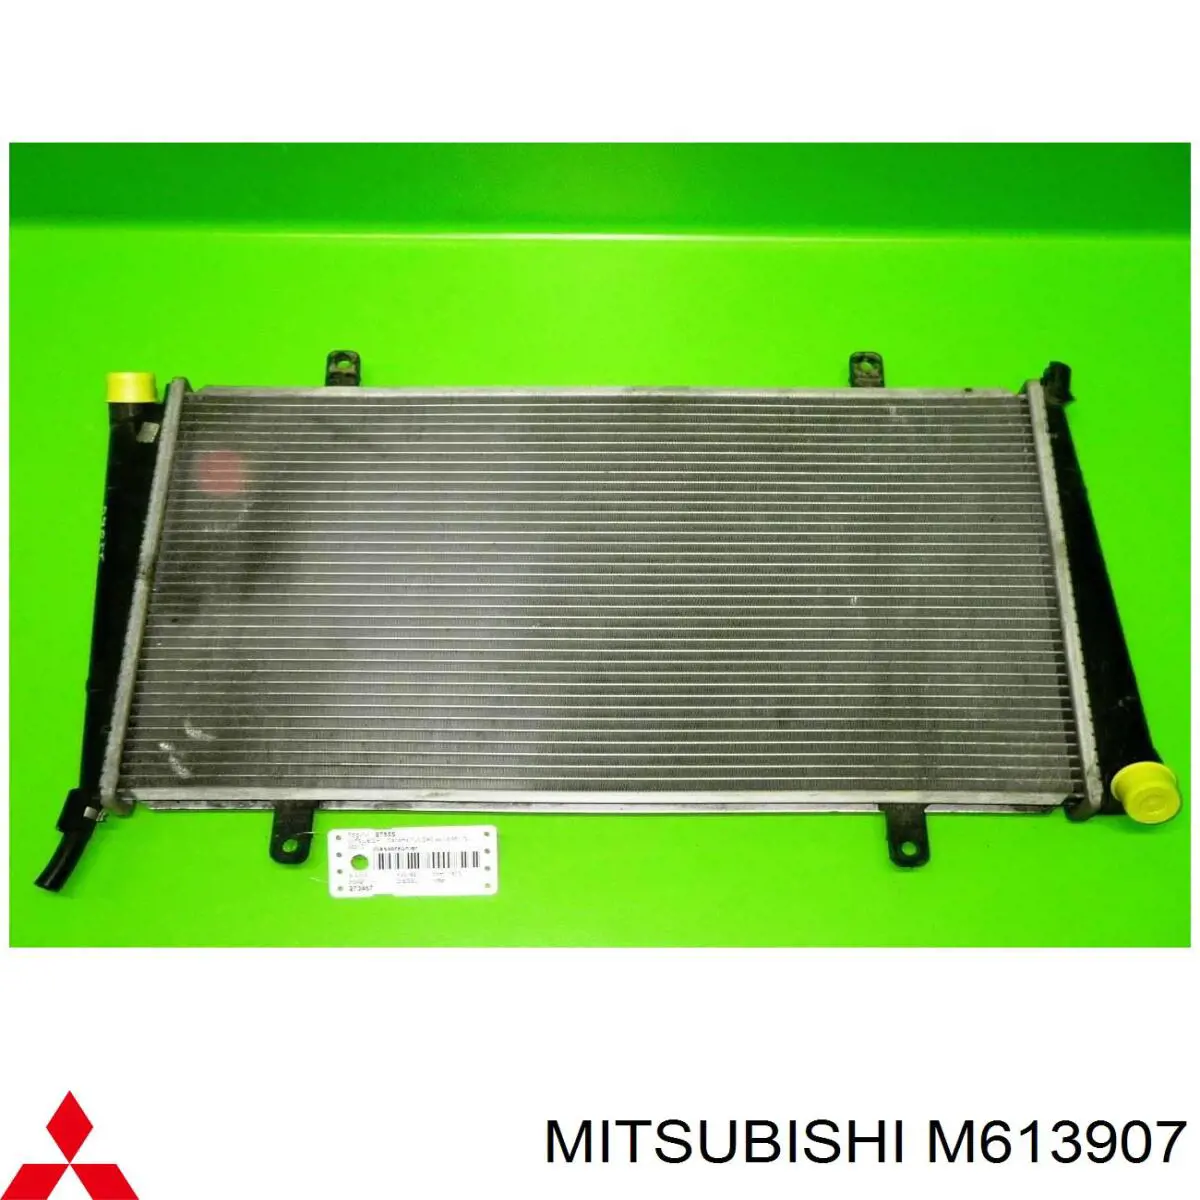 M613907 Mitsubishi радиатор